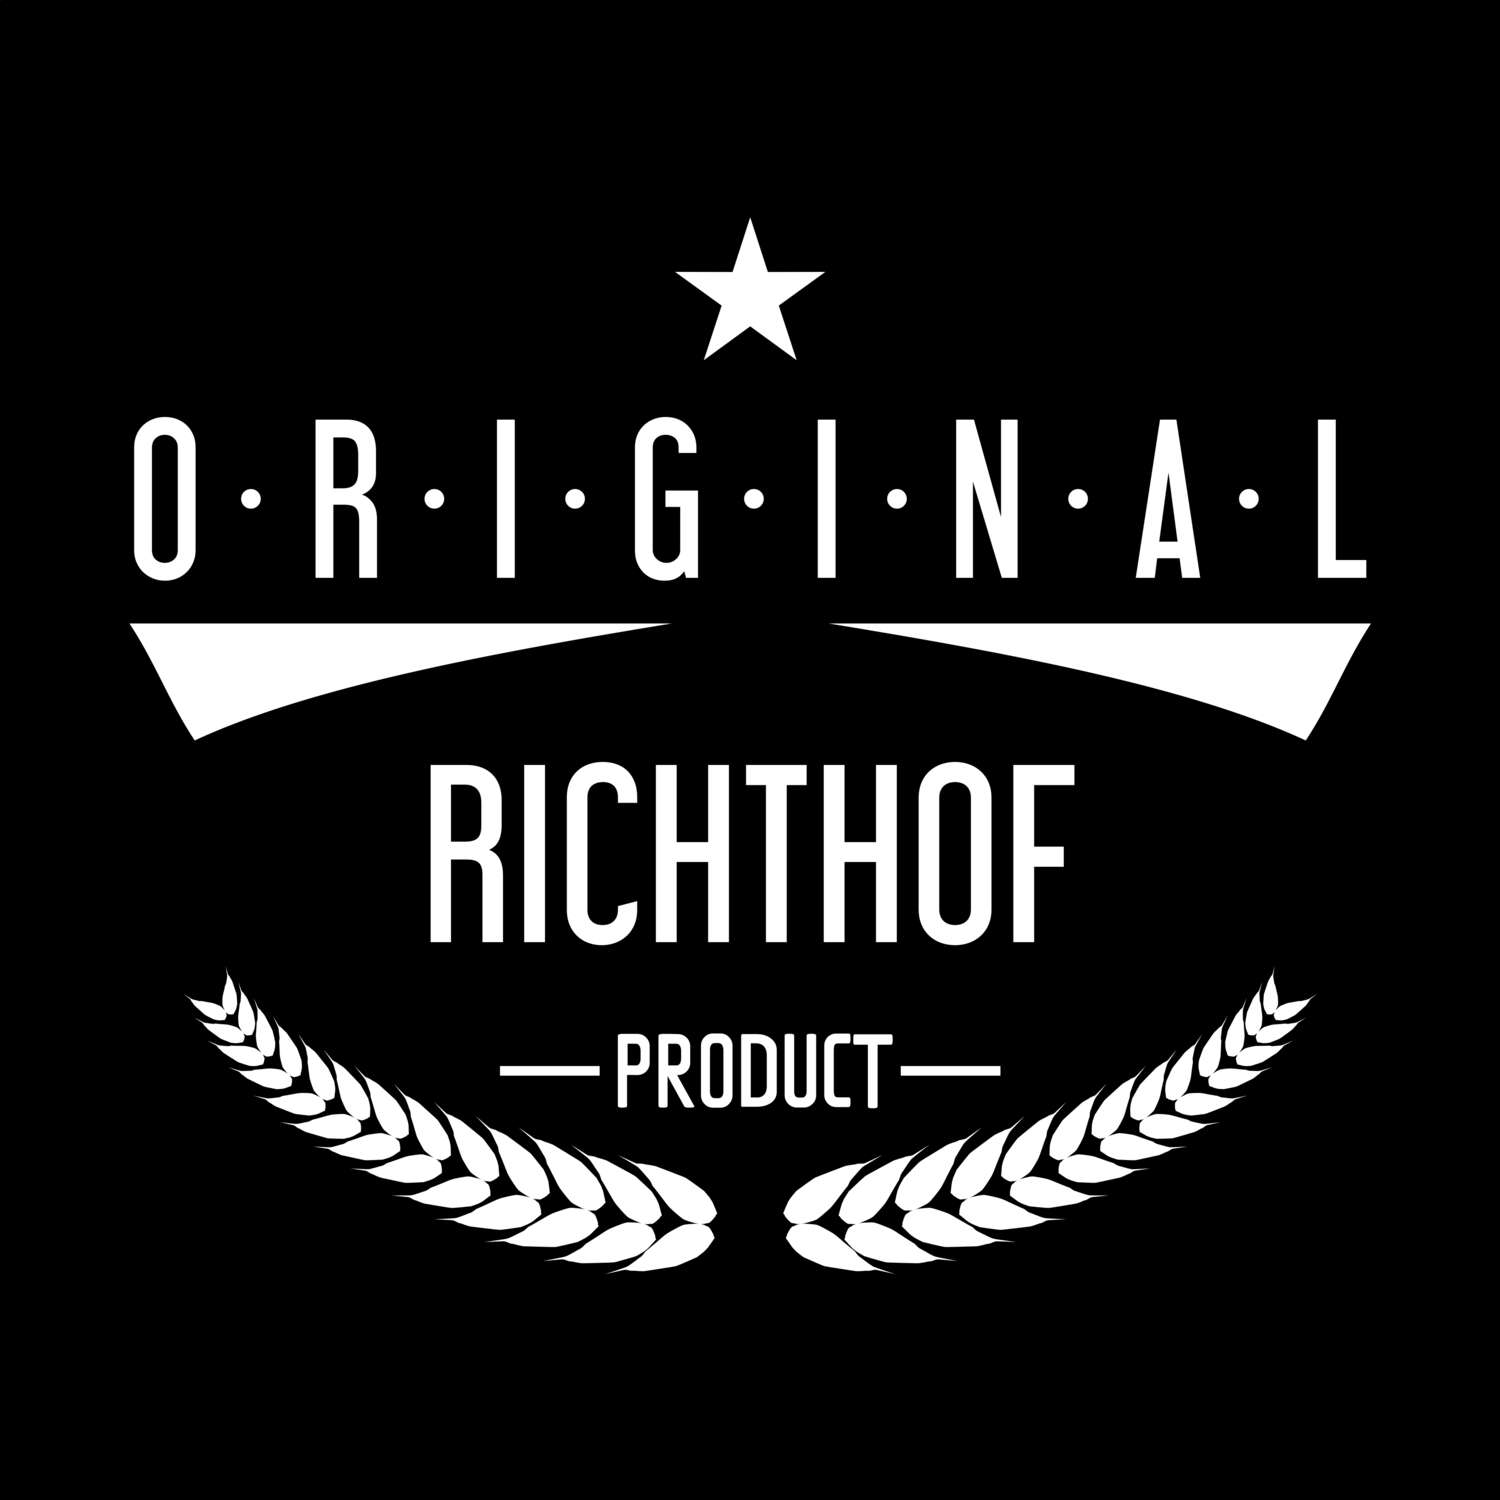 Richthof T-Shirt »Original Product«